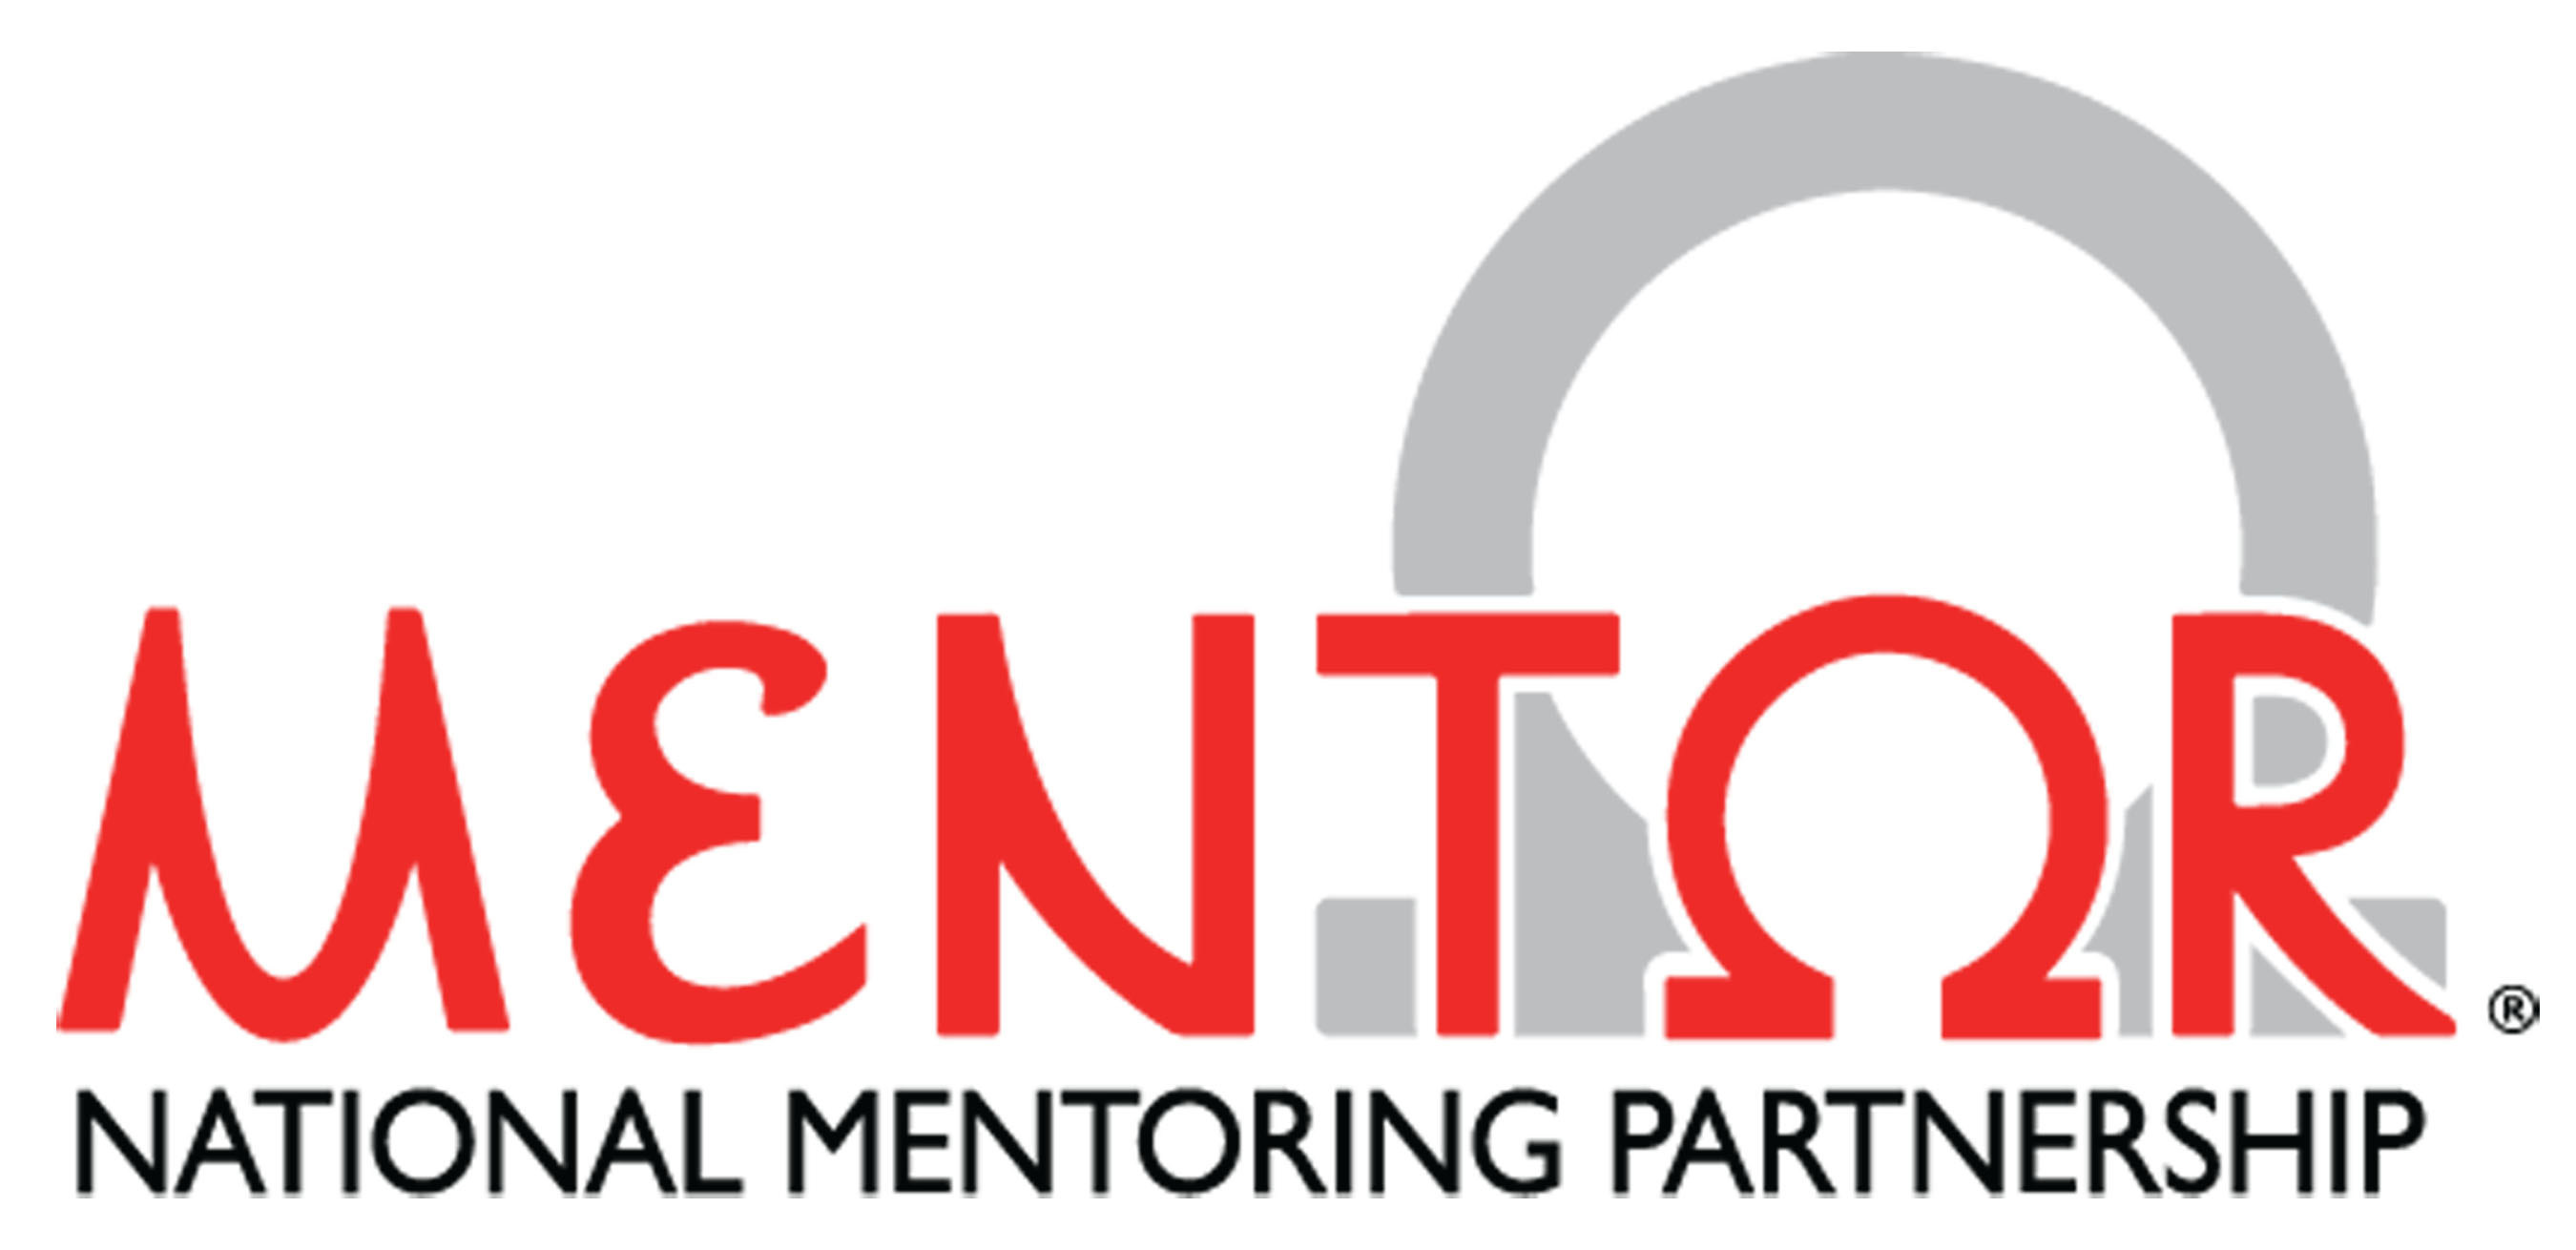 MENTOR: The National Mentoring Partnership